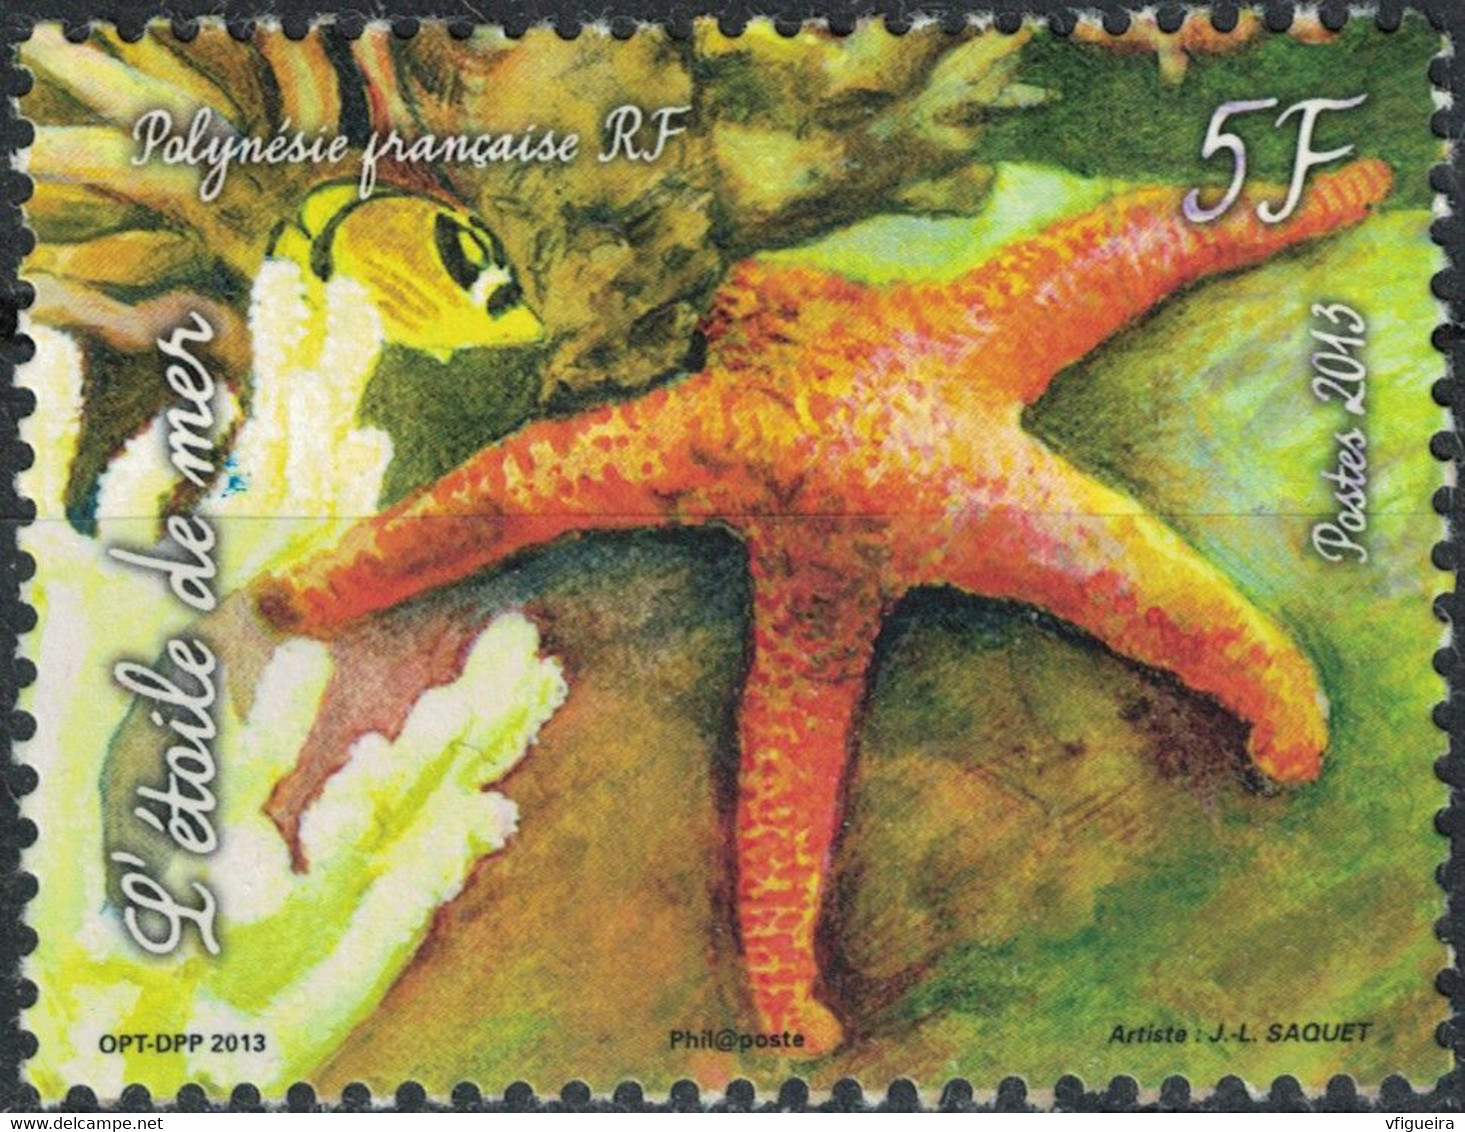 Tahiti 2013 Oblitéré Used Faune Marine Starfish étoile De Mer - Usati